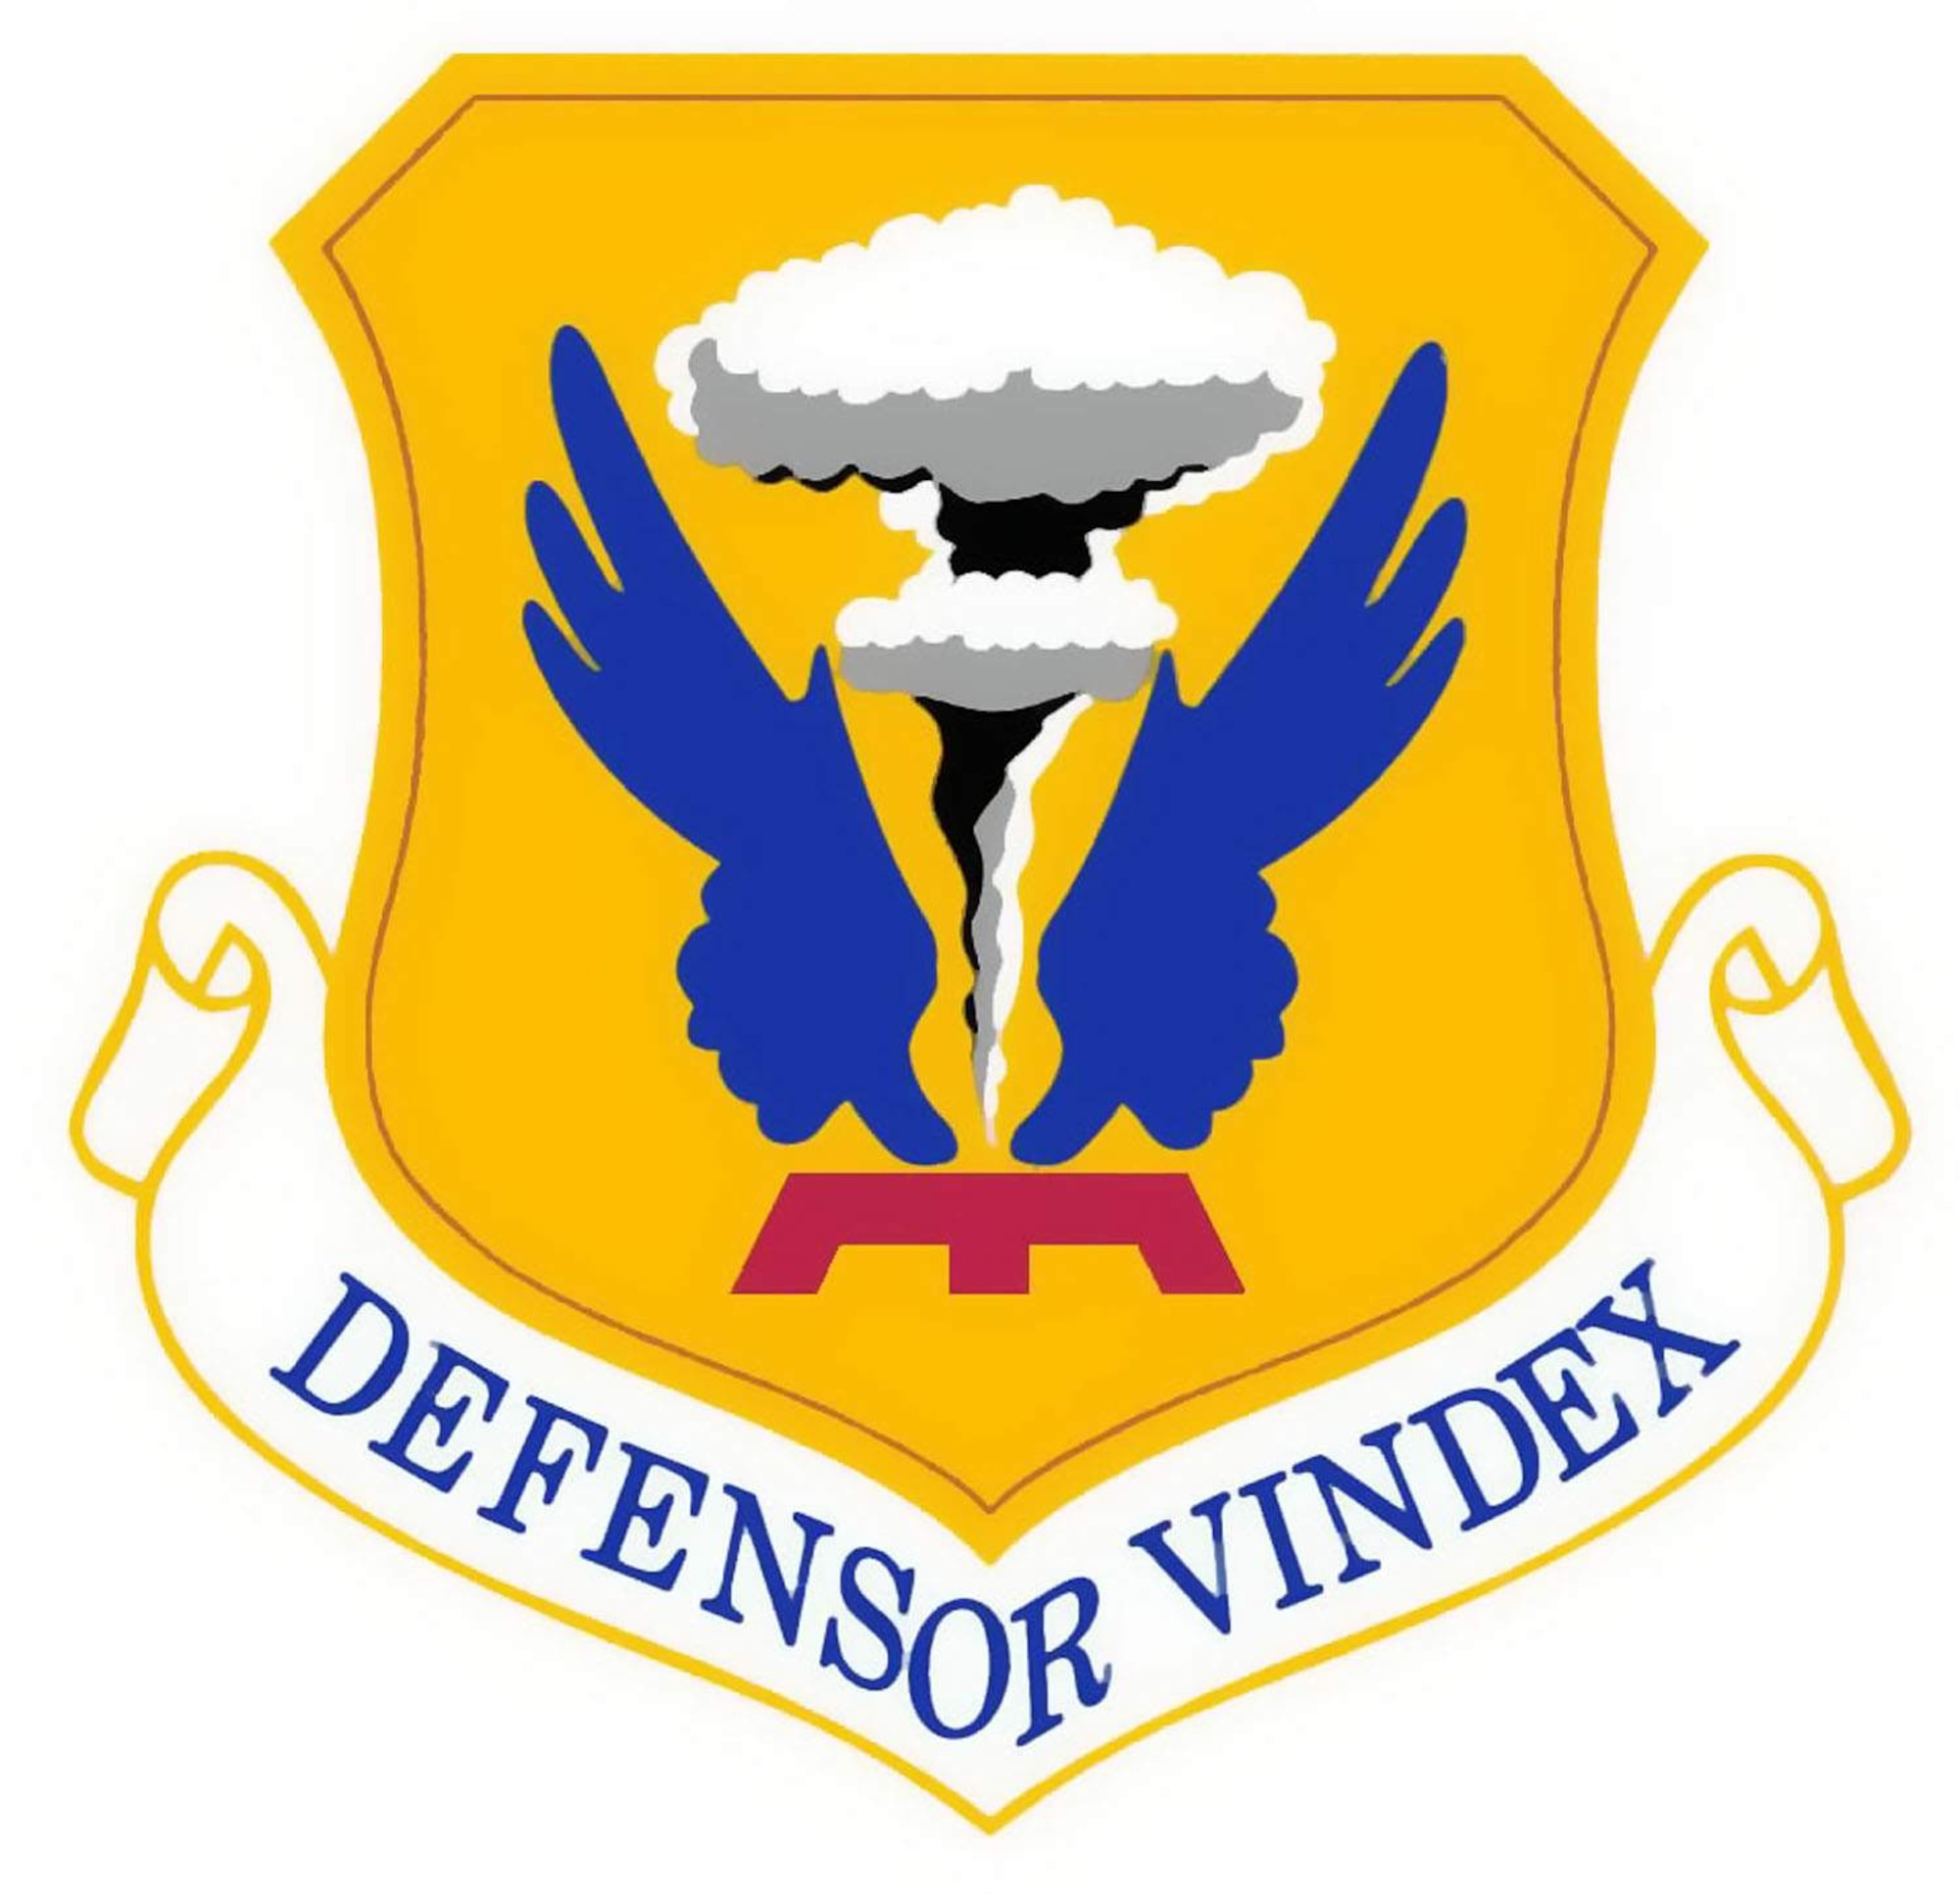 509th Bomb Wing shield (U.S. Air Force illustration)